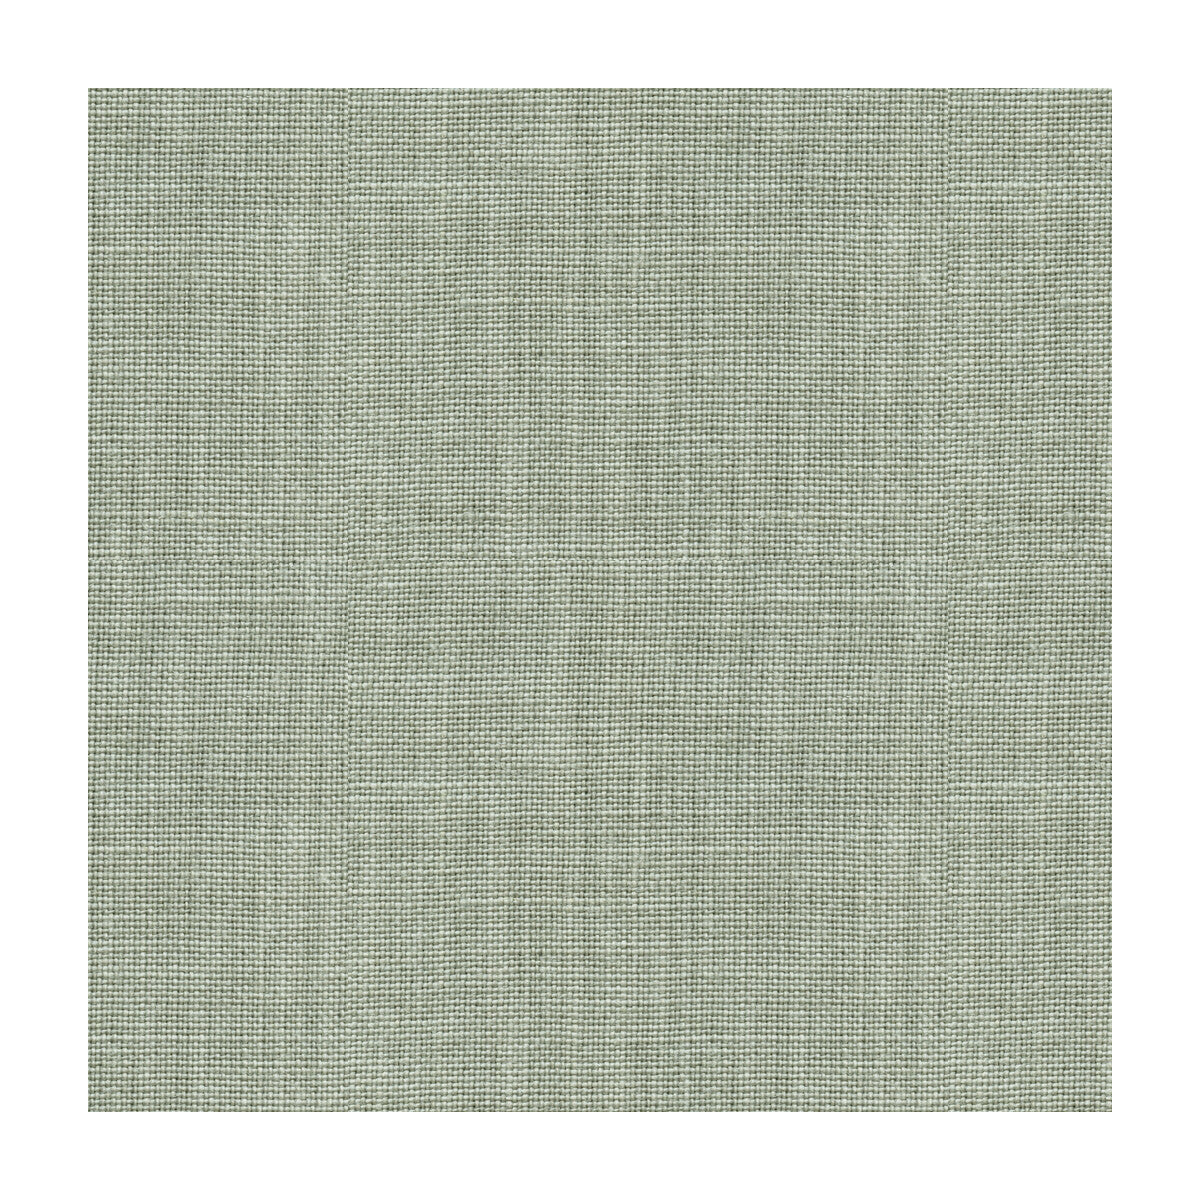 Kravet Basics fabric in 33767-52 color - pattern 33767.52.0 - by Kravet Basics in the Gis collection